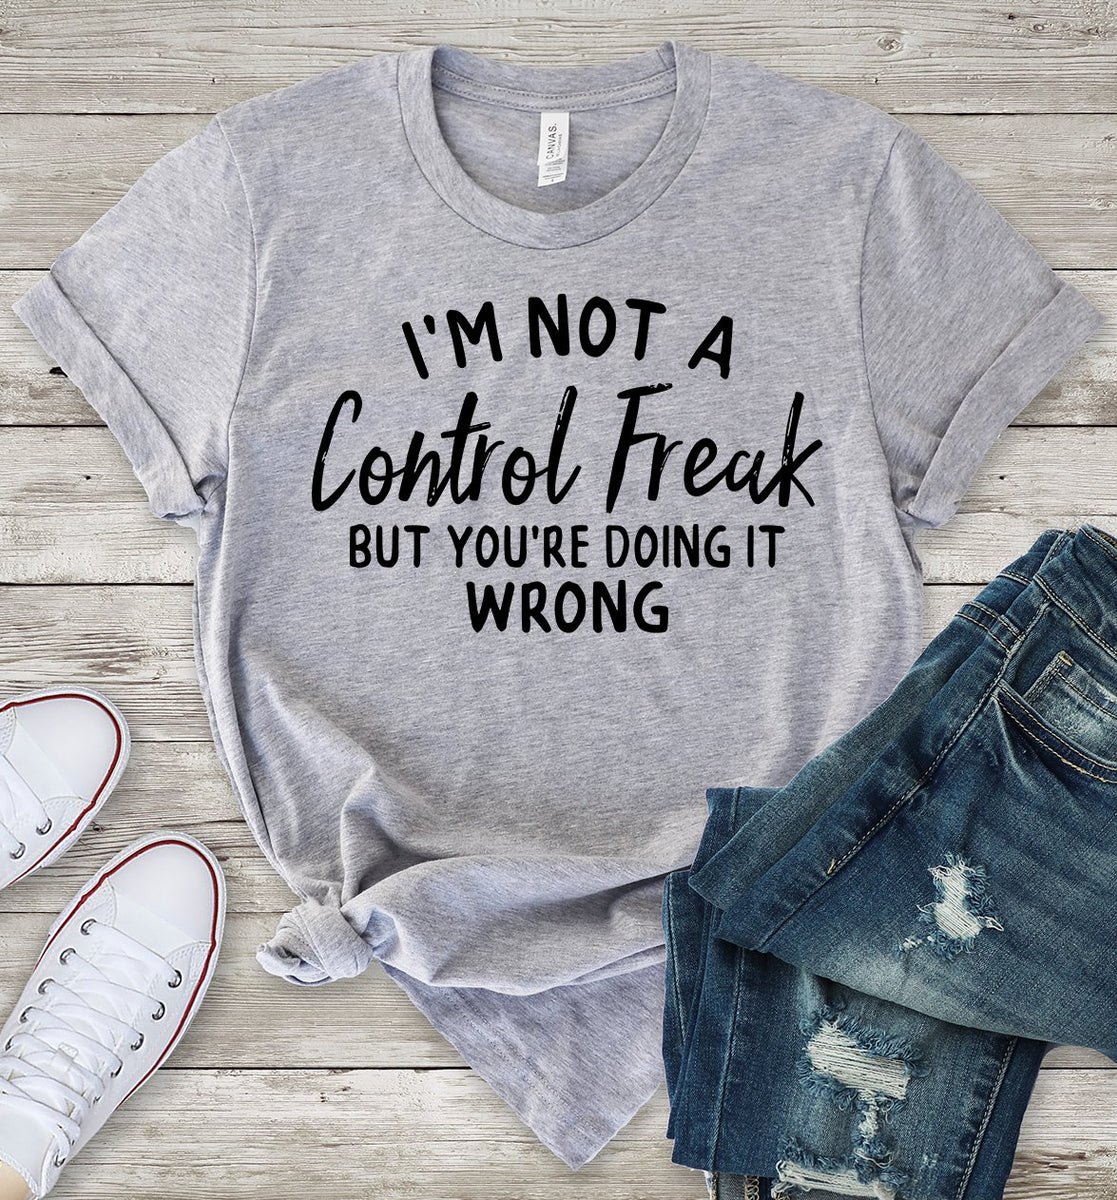 I'm Not a Control Freak But You're Doing it Wrong T-Shirt